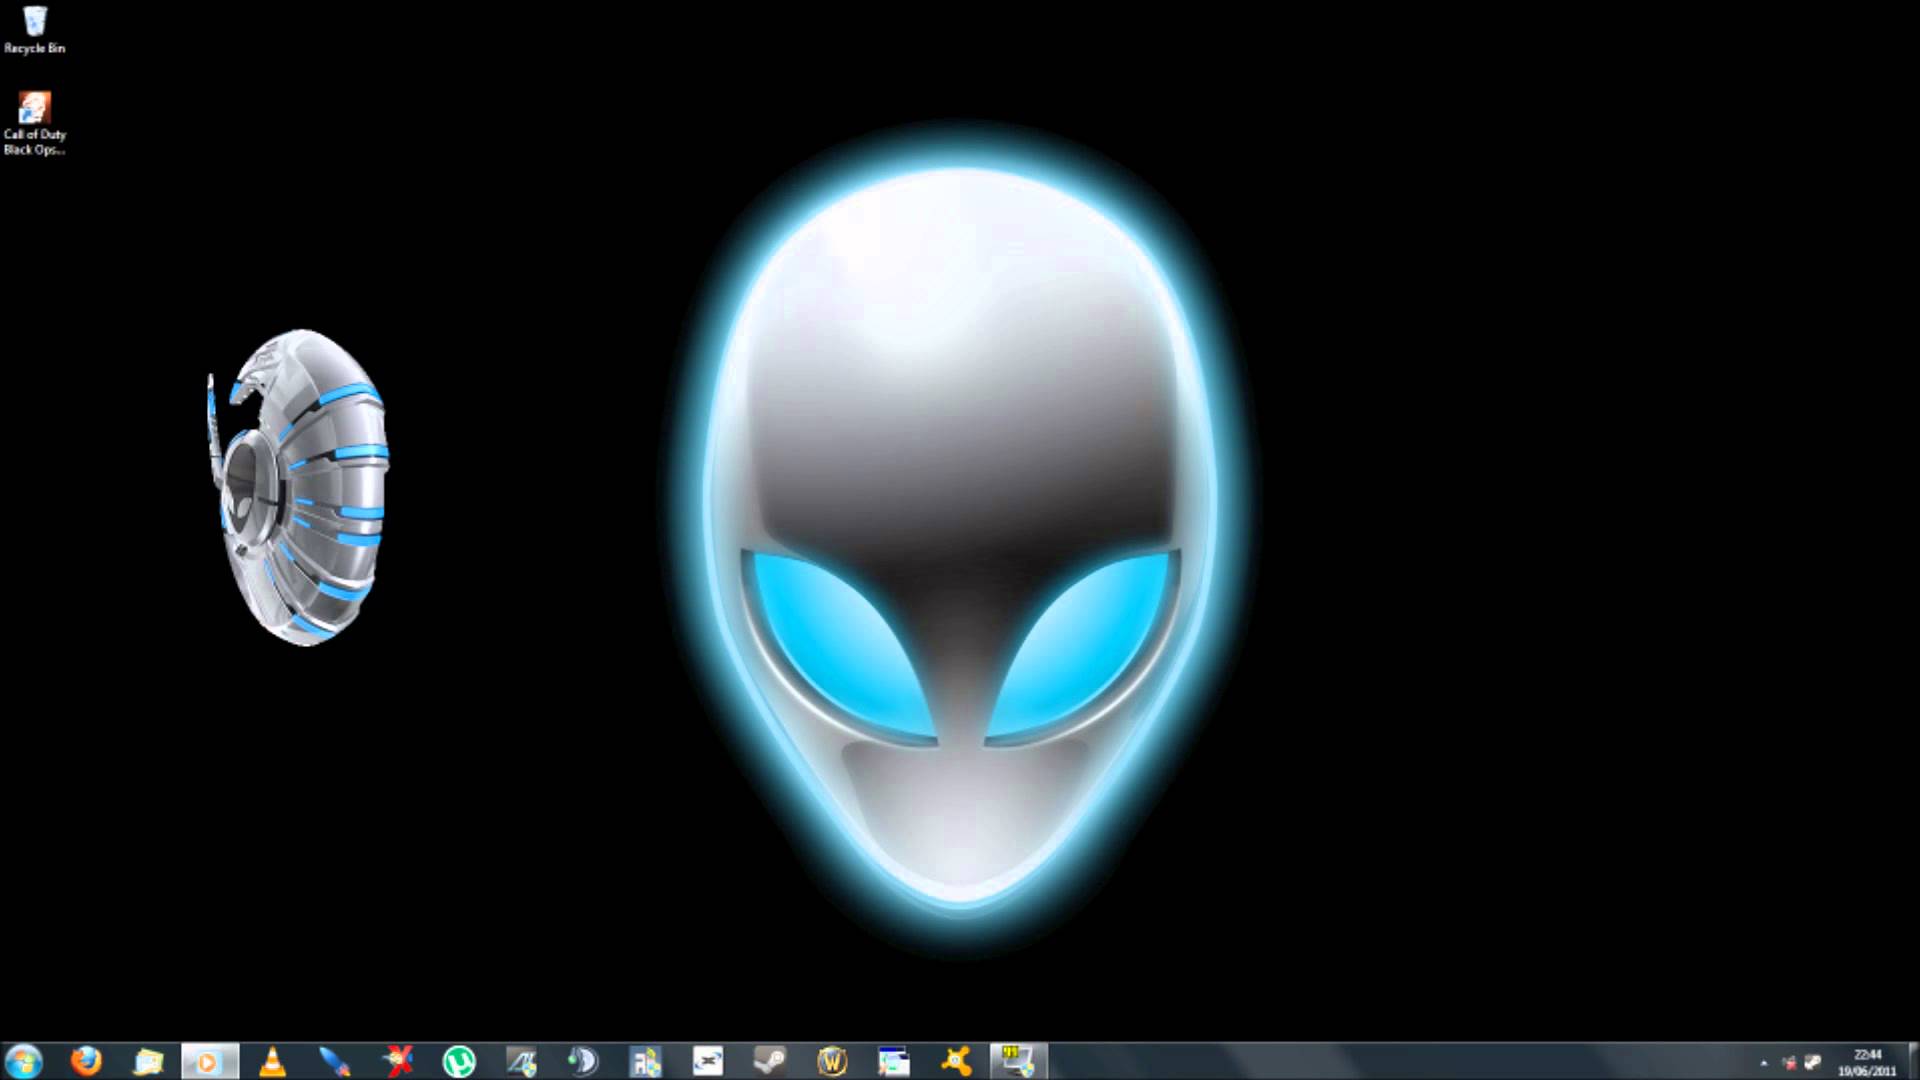 Alienware Windows 7 theme and Windows Media Player 12 skin